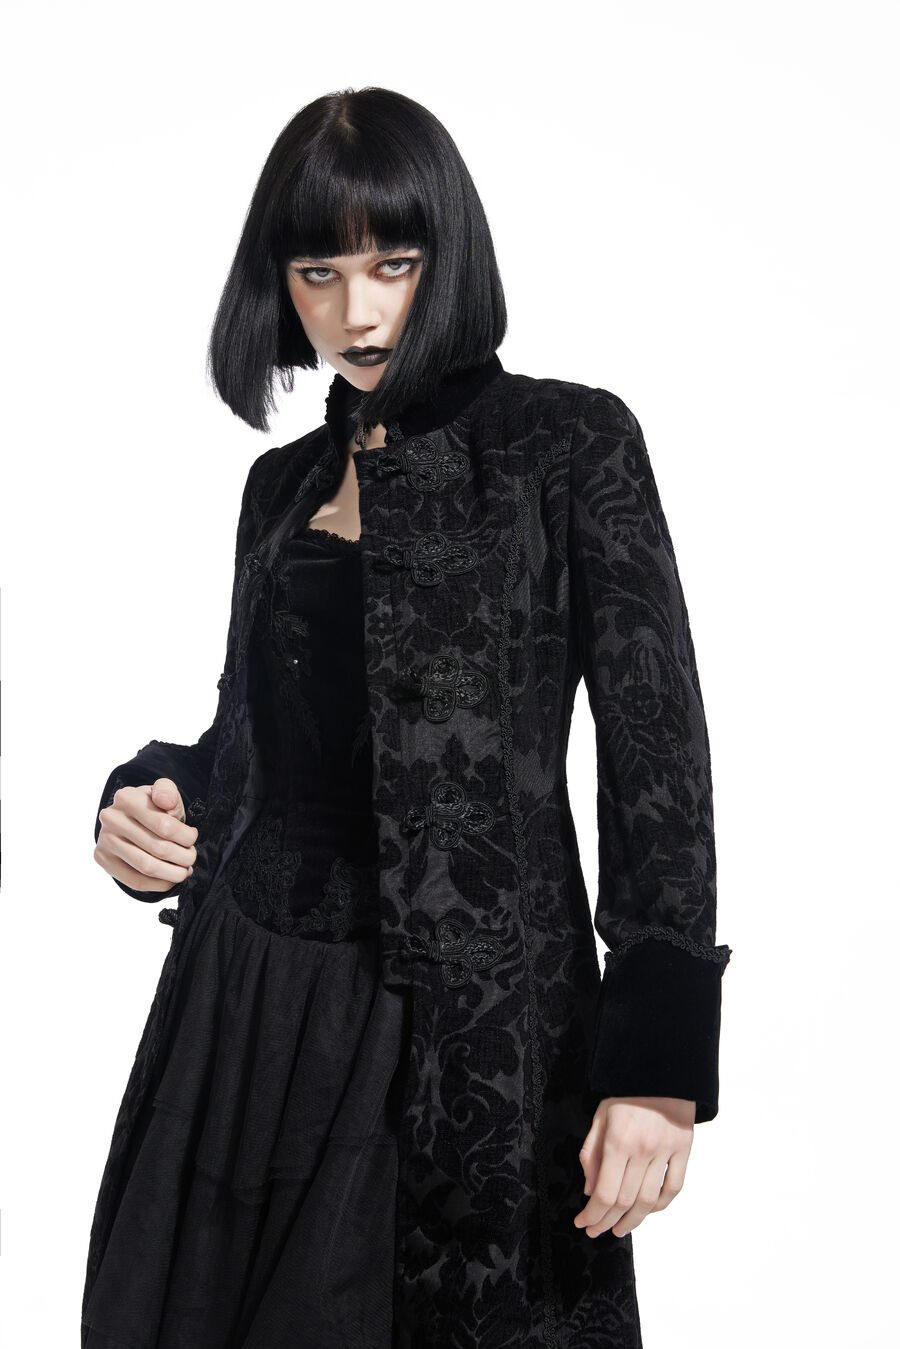 photo n°4 : Manteau long femme gothic brocard noir